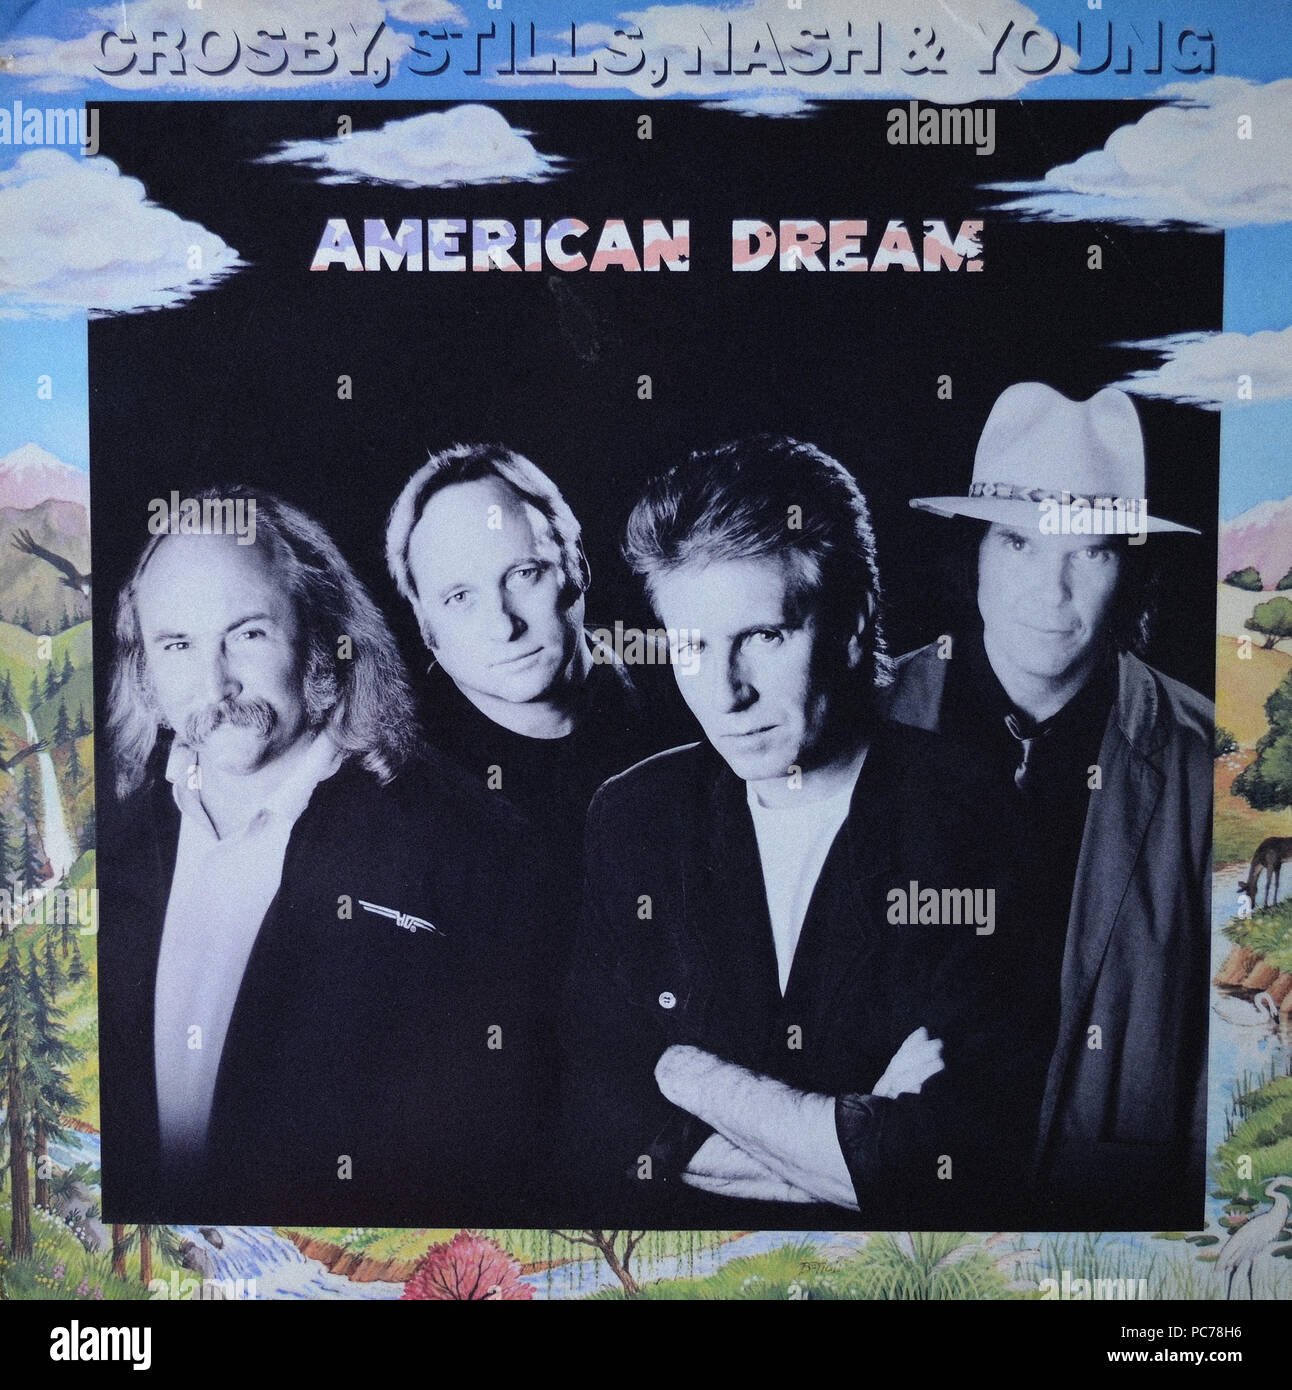 Crosby, Stills, Nash & Young - American Dream - Vintage vinyl album cover  Stock Photo - Alamy